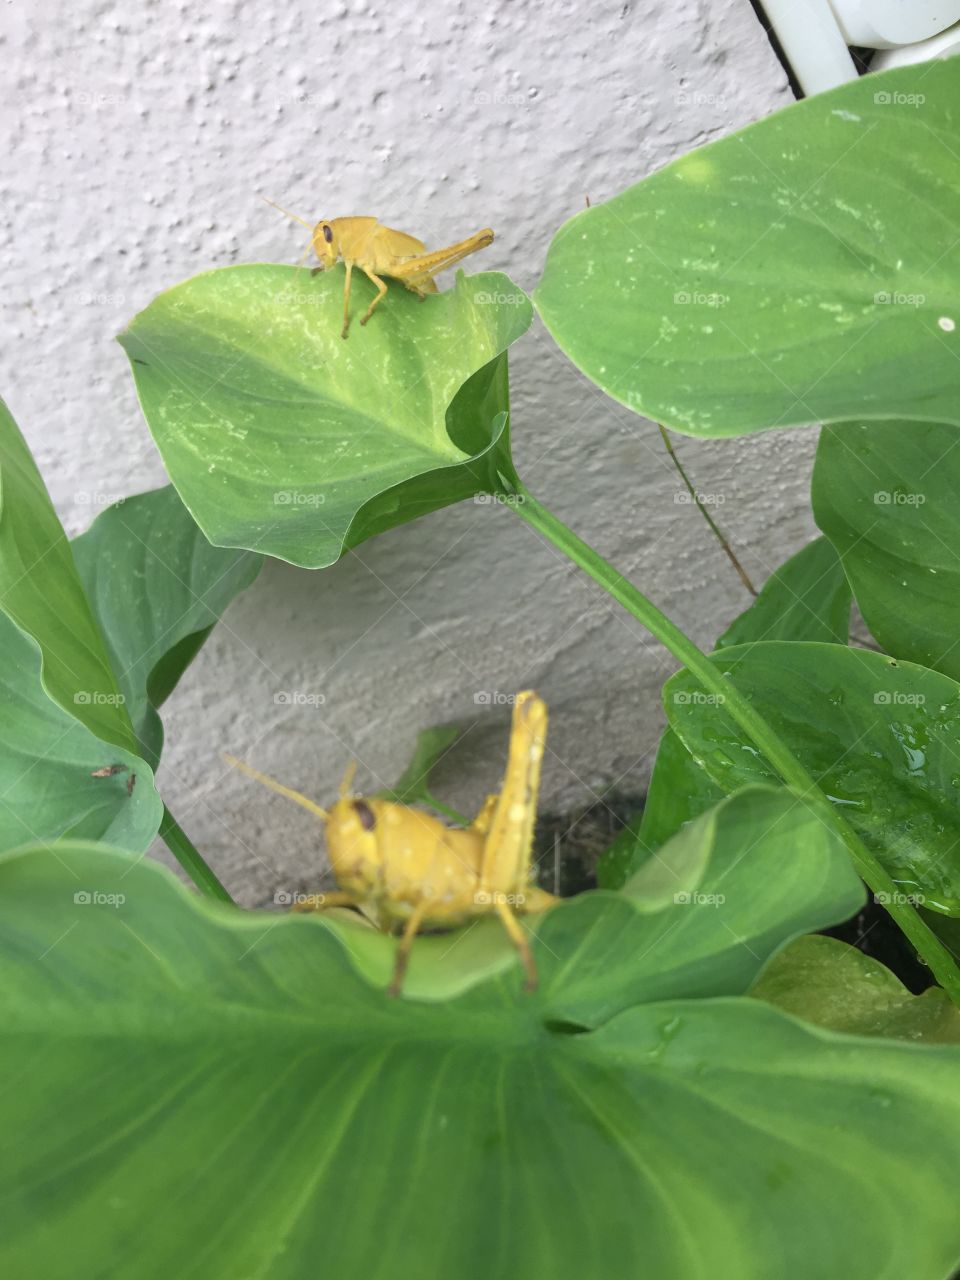 The friendly neighborhood grasshoppers 